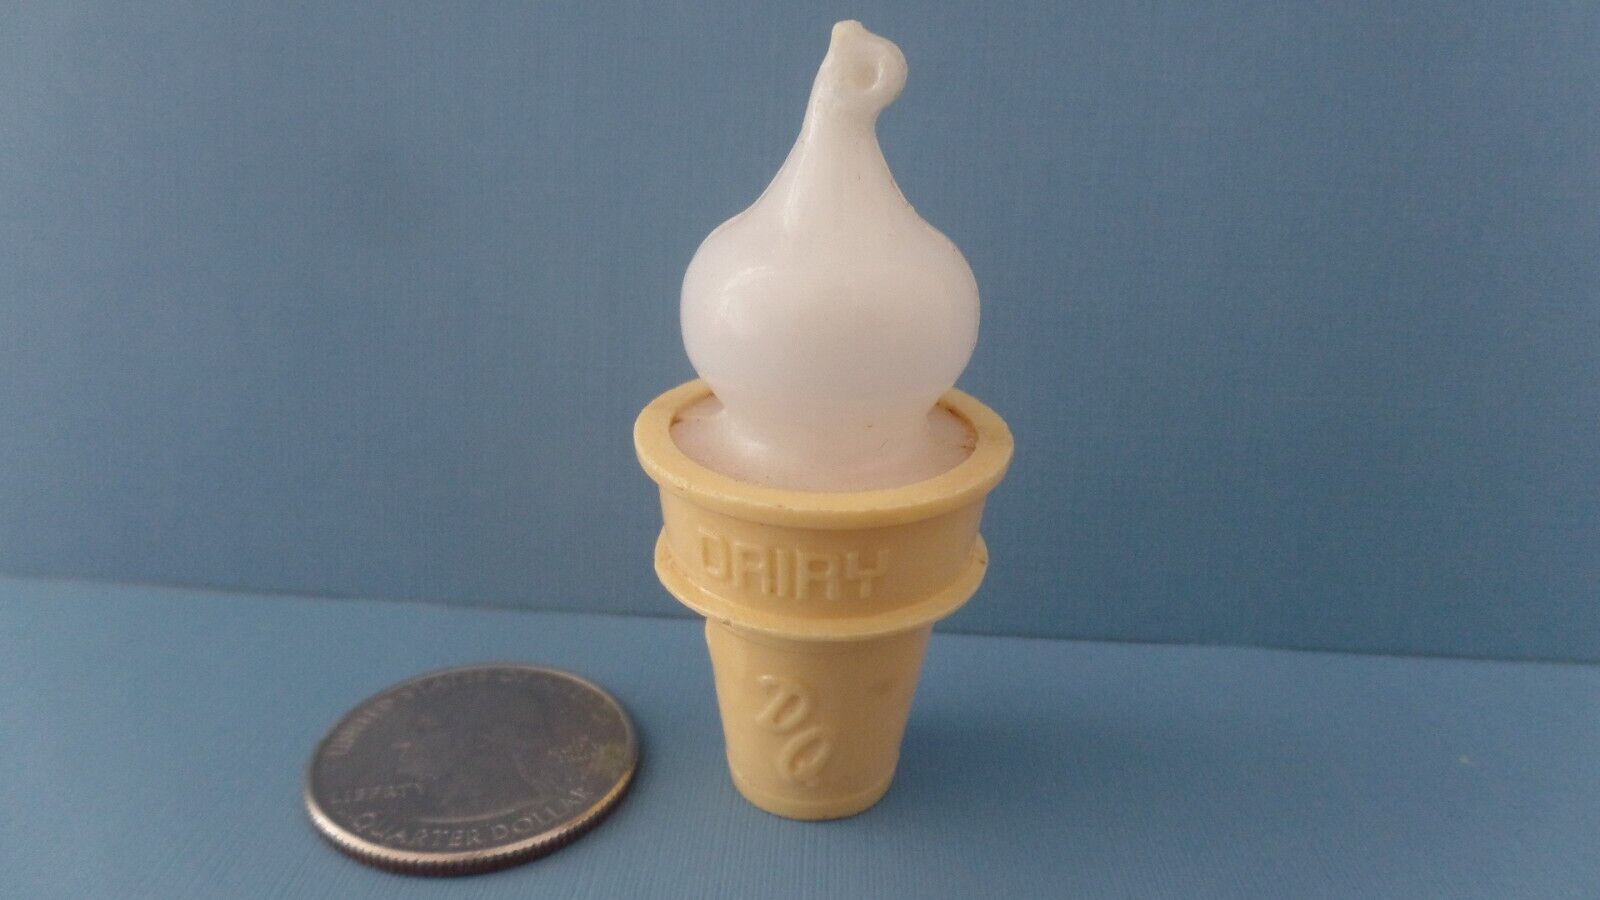 Vintage DAIRY QUEEN Plastic Ice Cream Toy Whistle Advertising Mascot